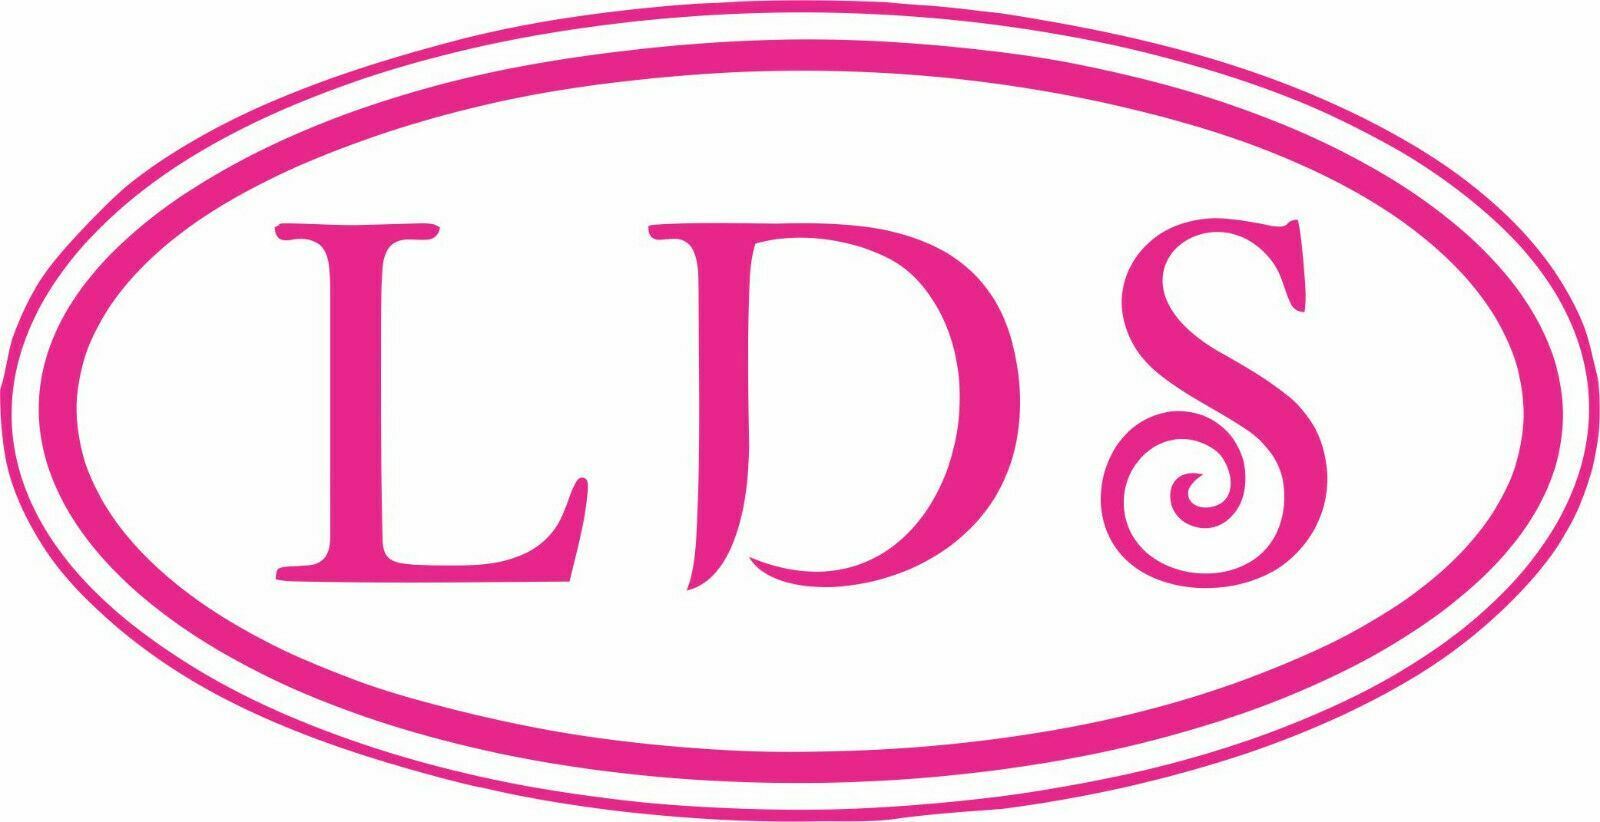 Religious Christian Latter-Day-Saints LDS Window Decal - Powercall Sirens LLC